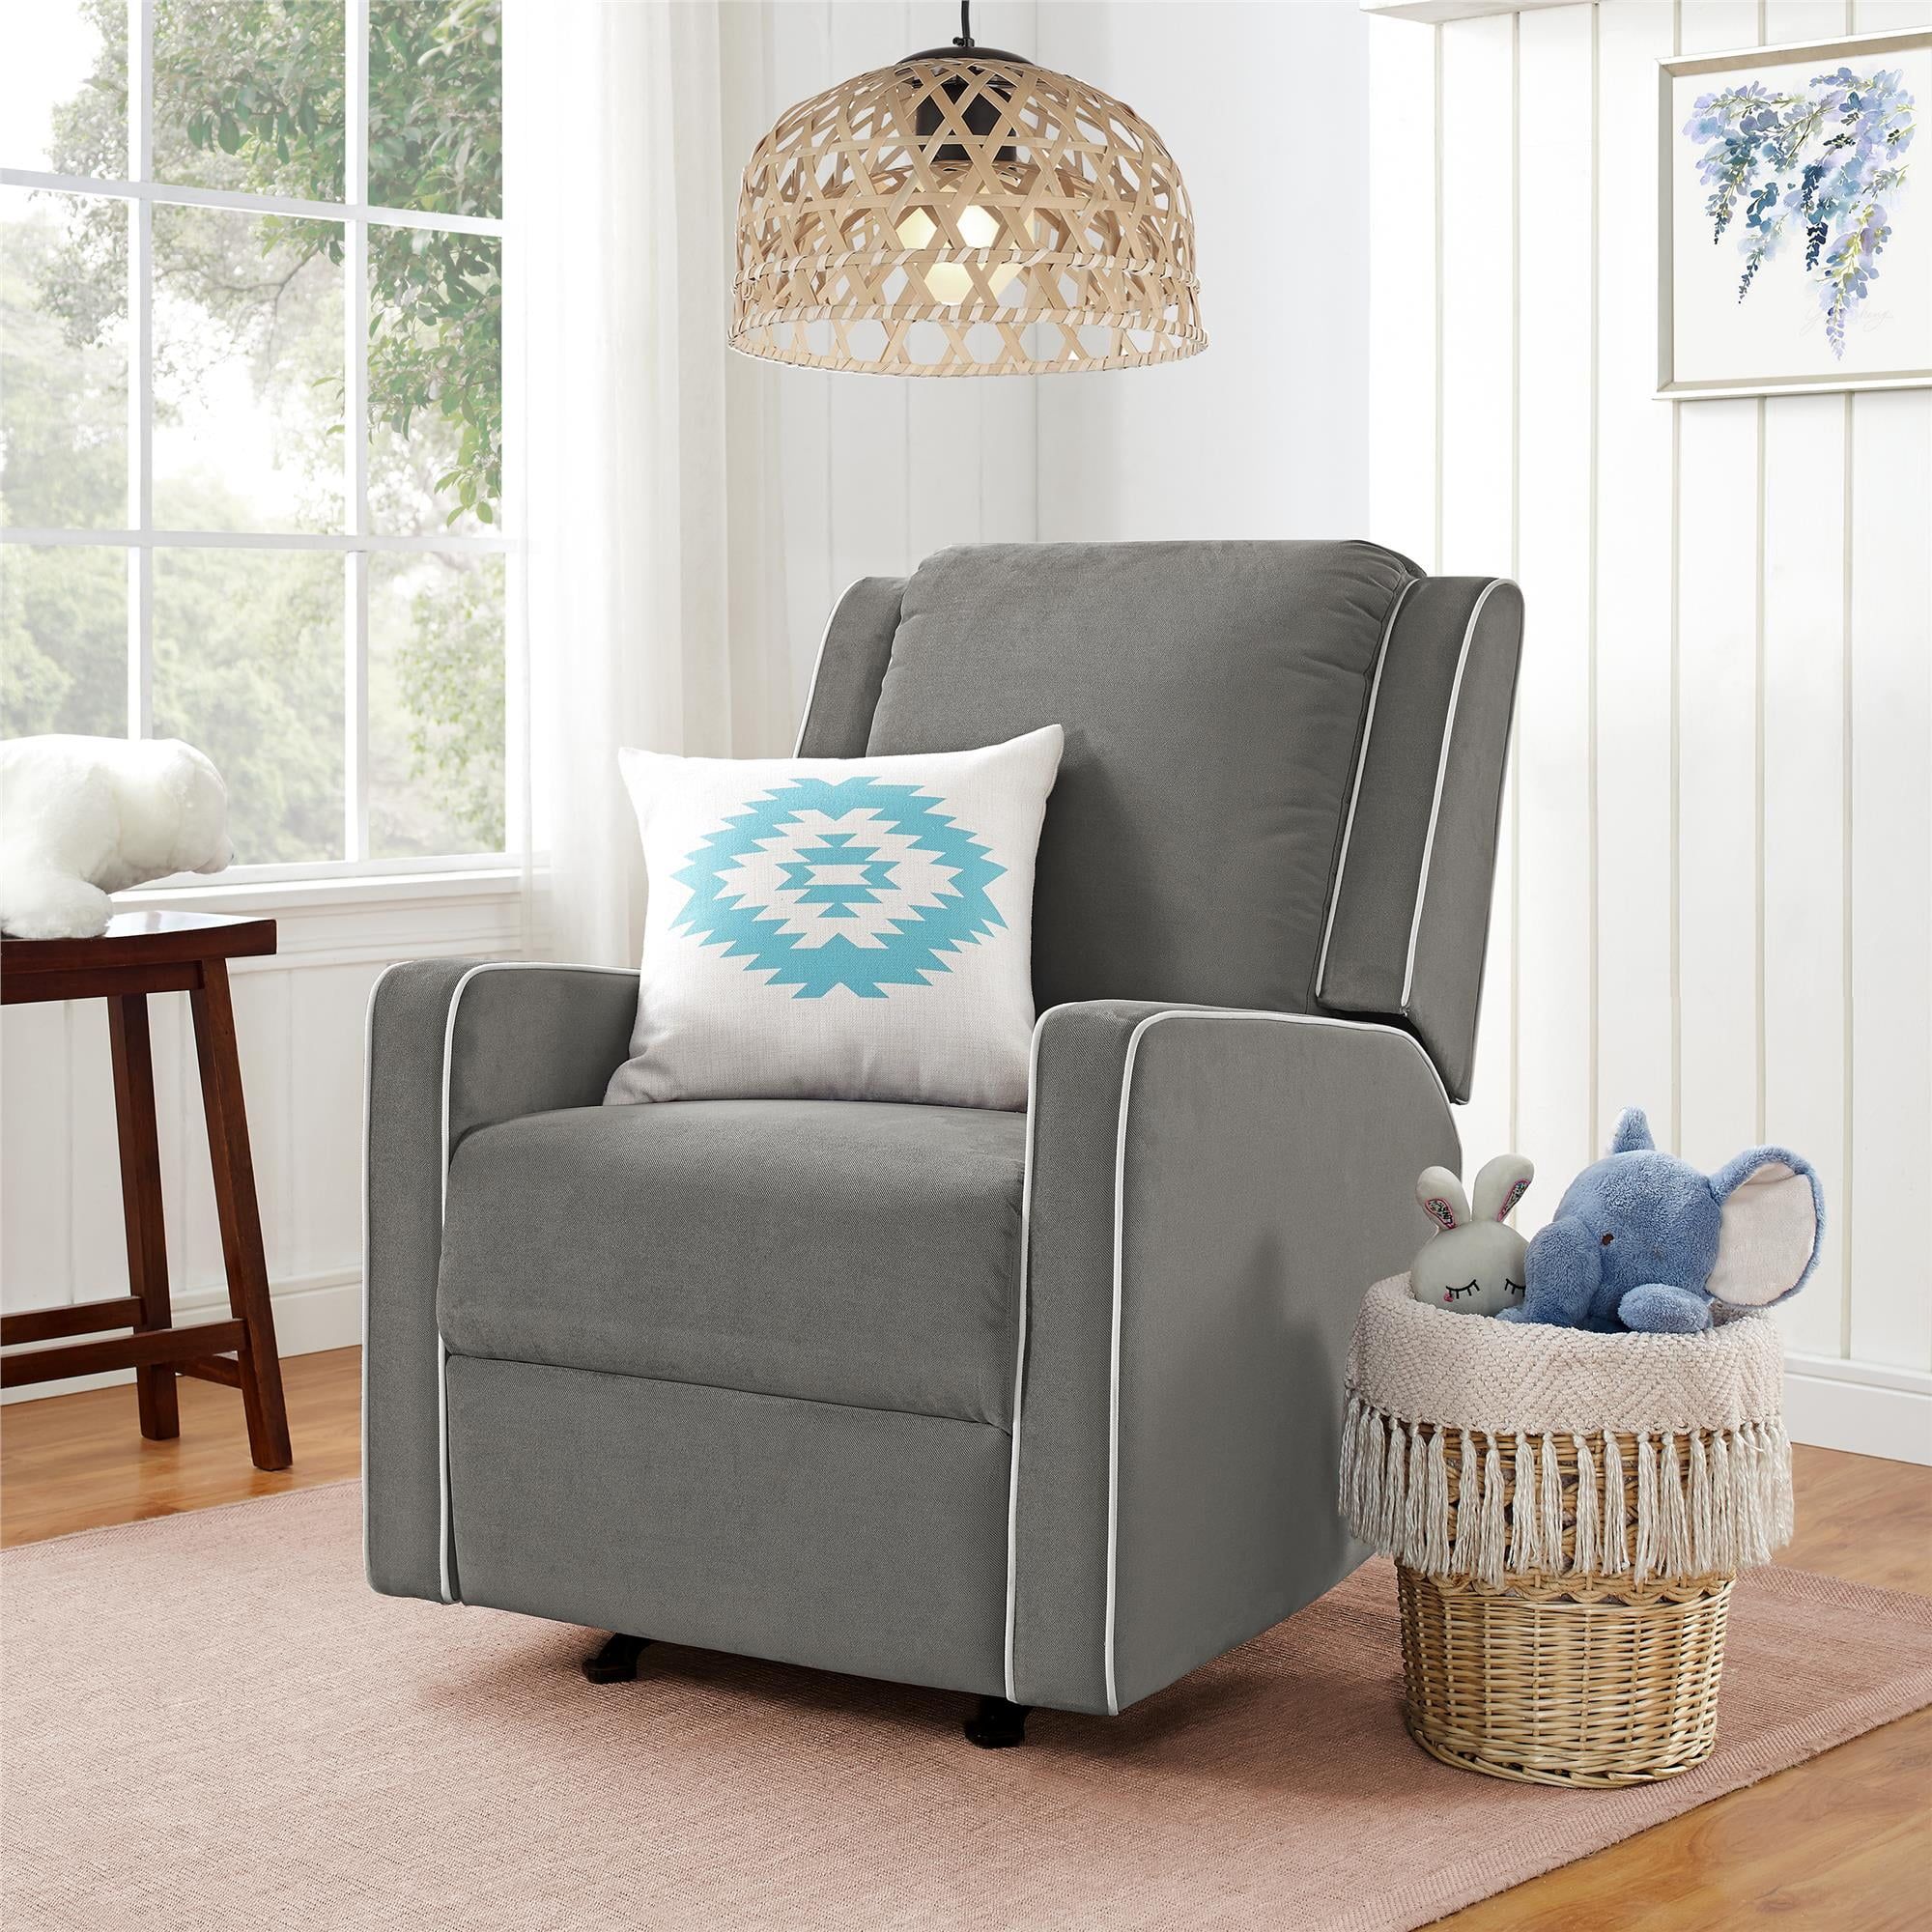 Baby Relax Robyn Rocker Recliner Chair, Nursery Furniture, Gray Linen | Walmart (US)